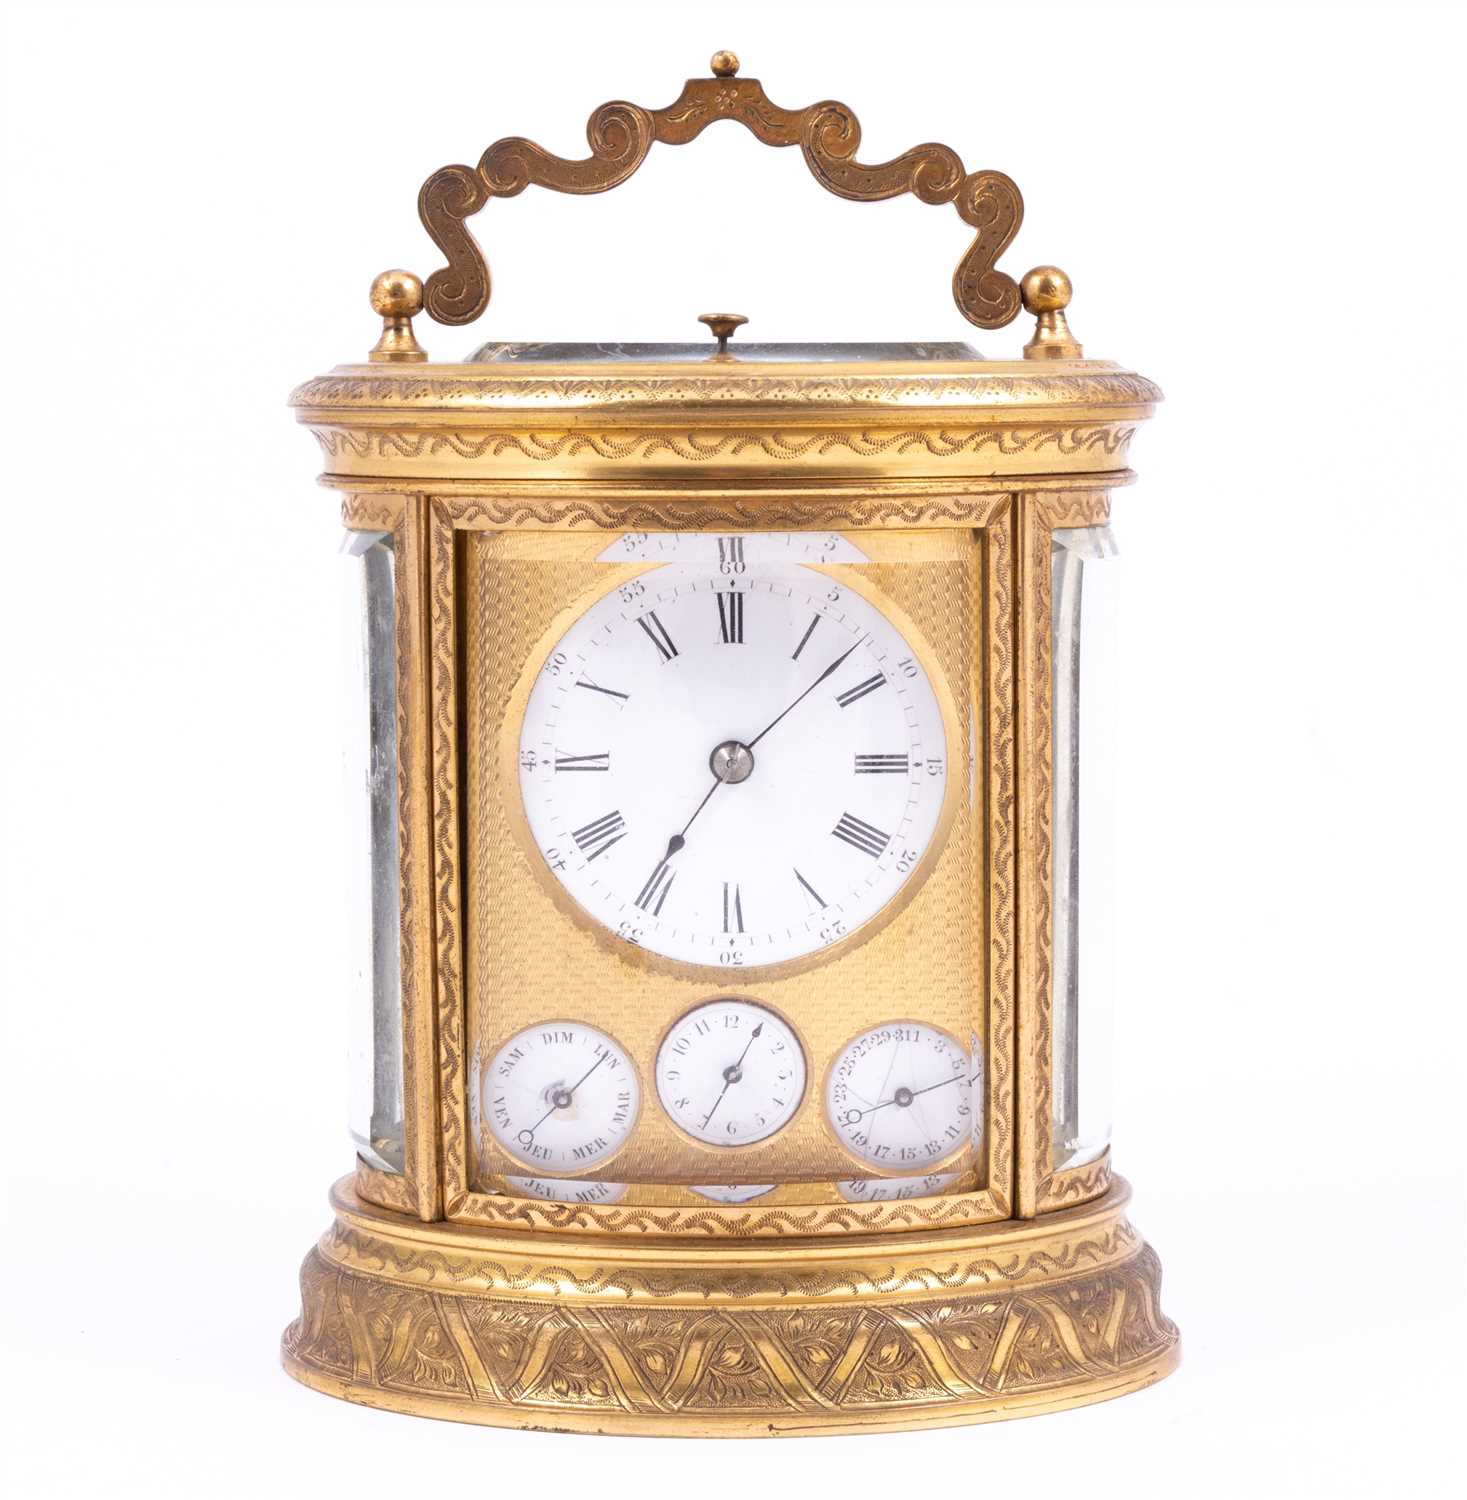 Lot 312 - French brass calendar carriage clock, circa 1880